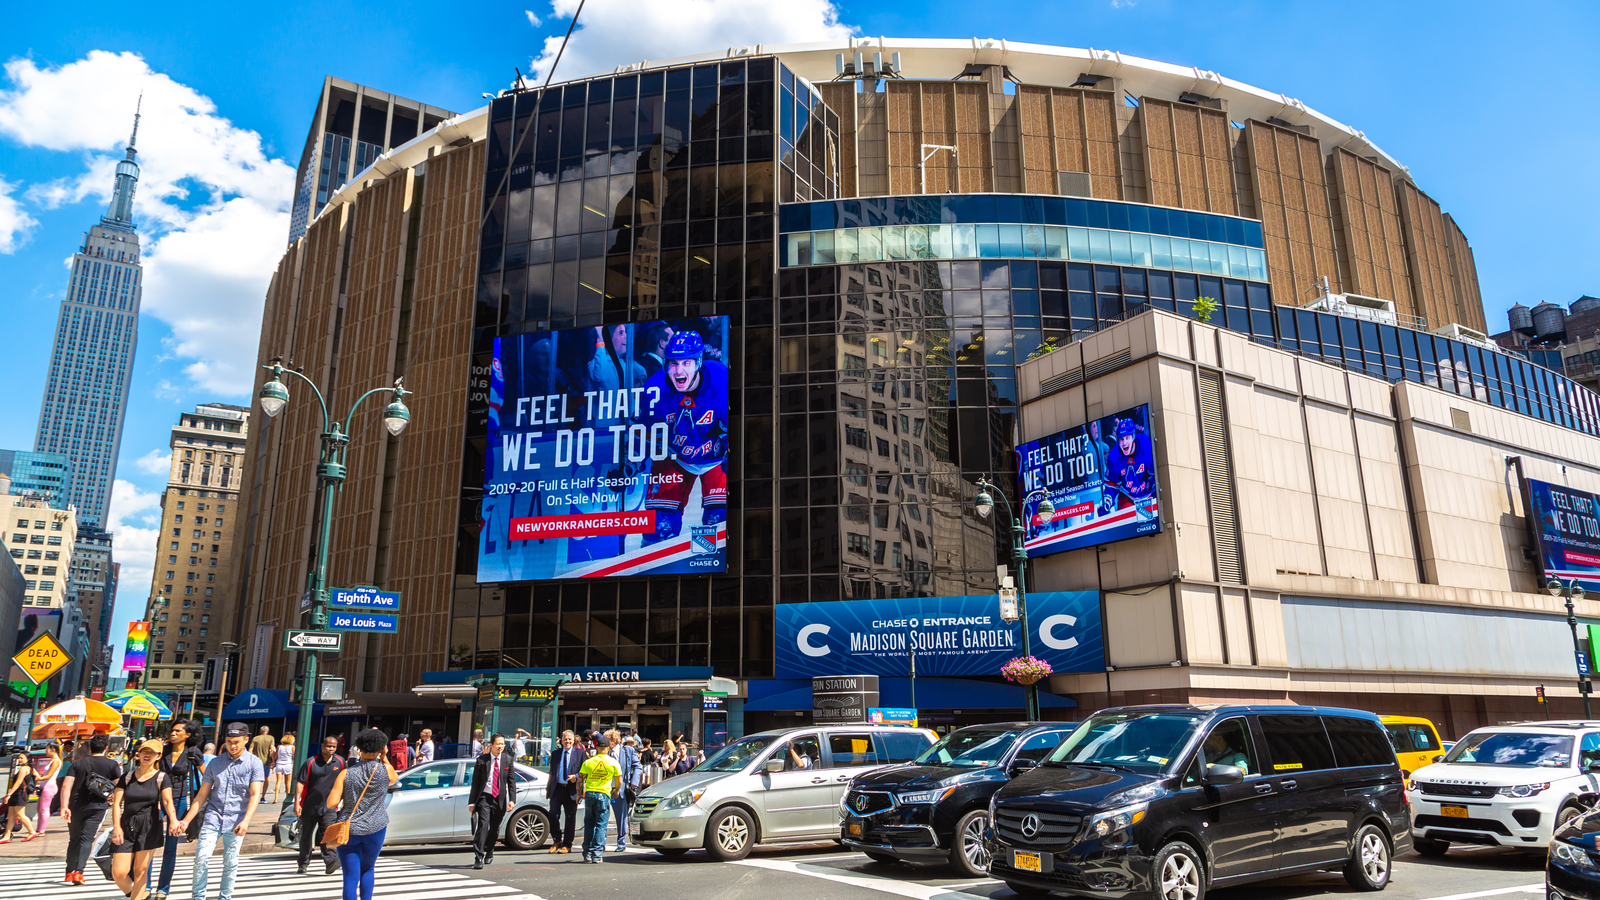 Madison Square Garden Entertainment: Upside Potential, But Risks